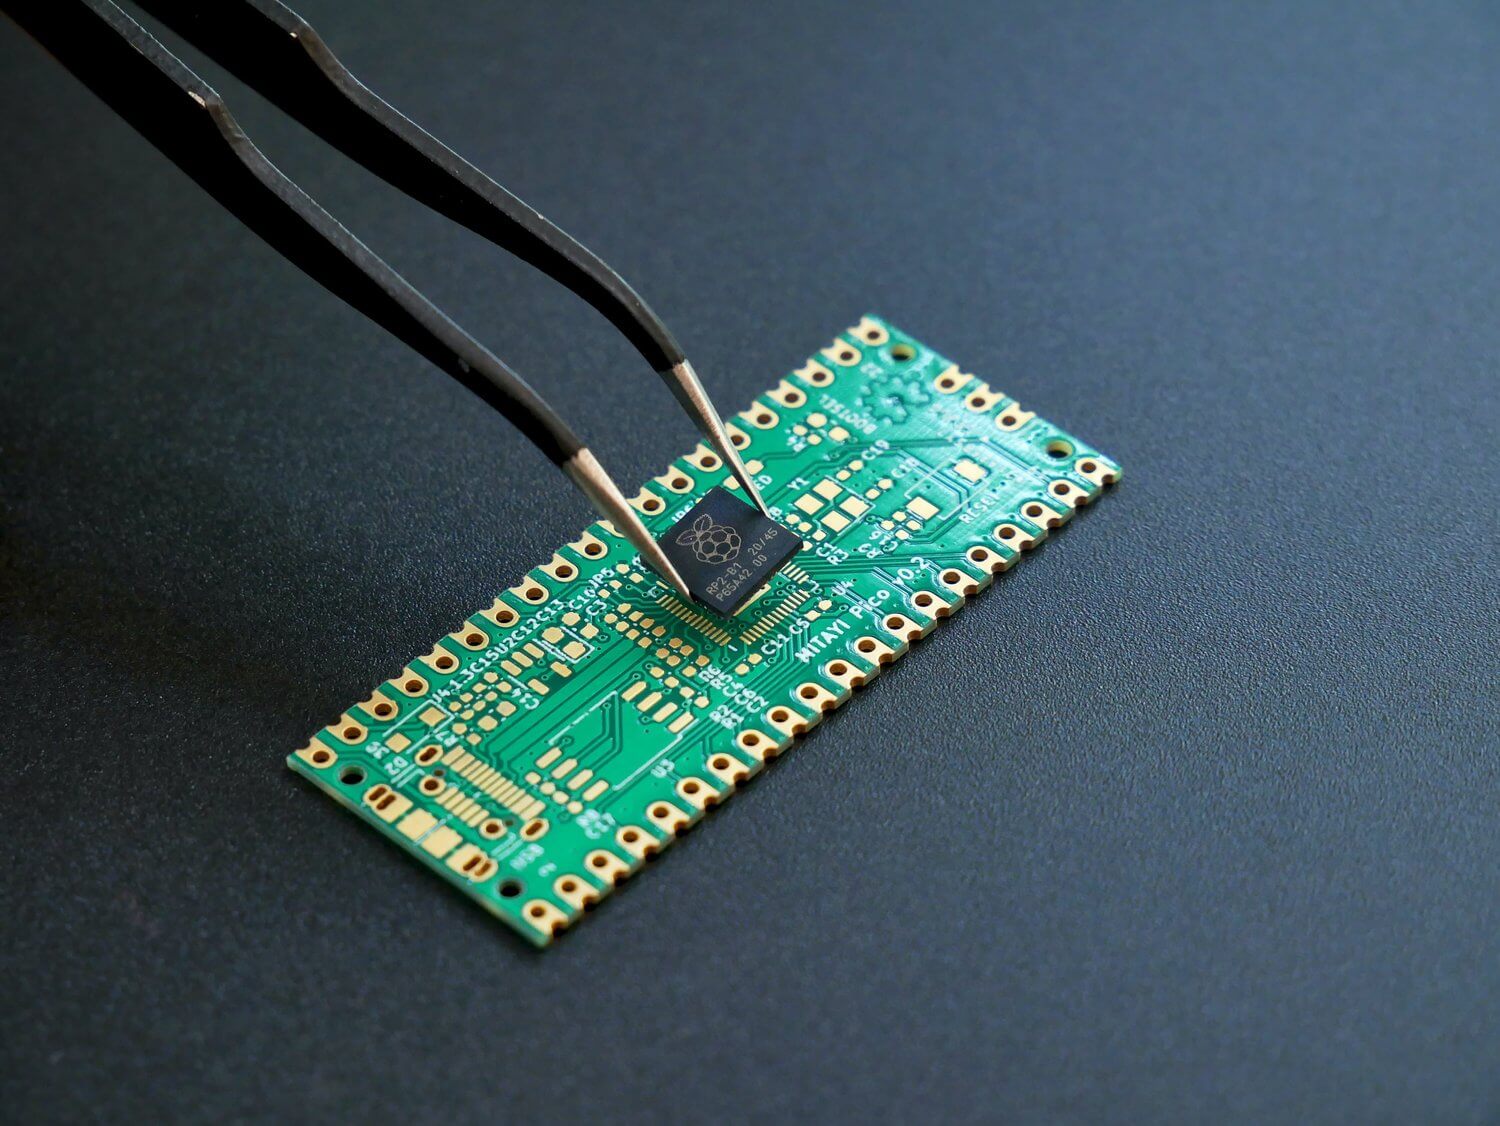 Stick image of a microchip